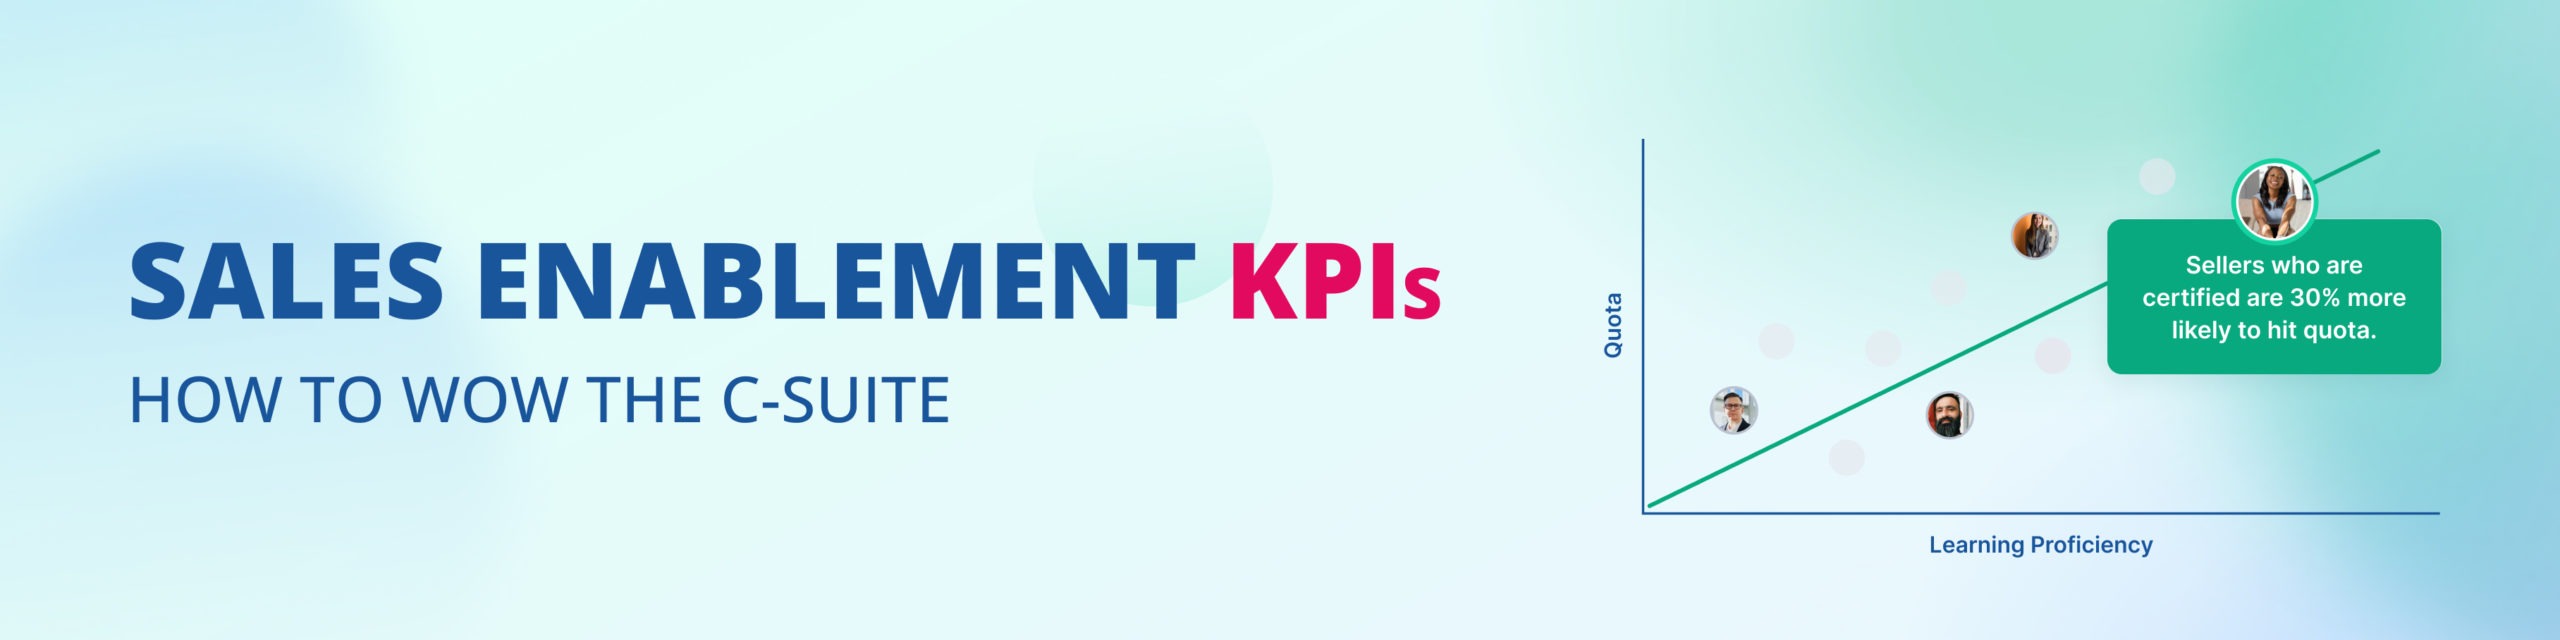 Sales Enablement KPIs blog banner